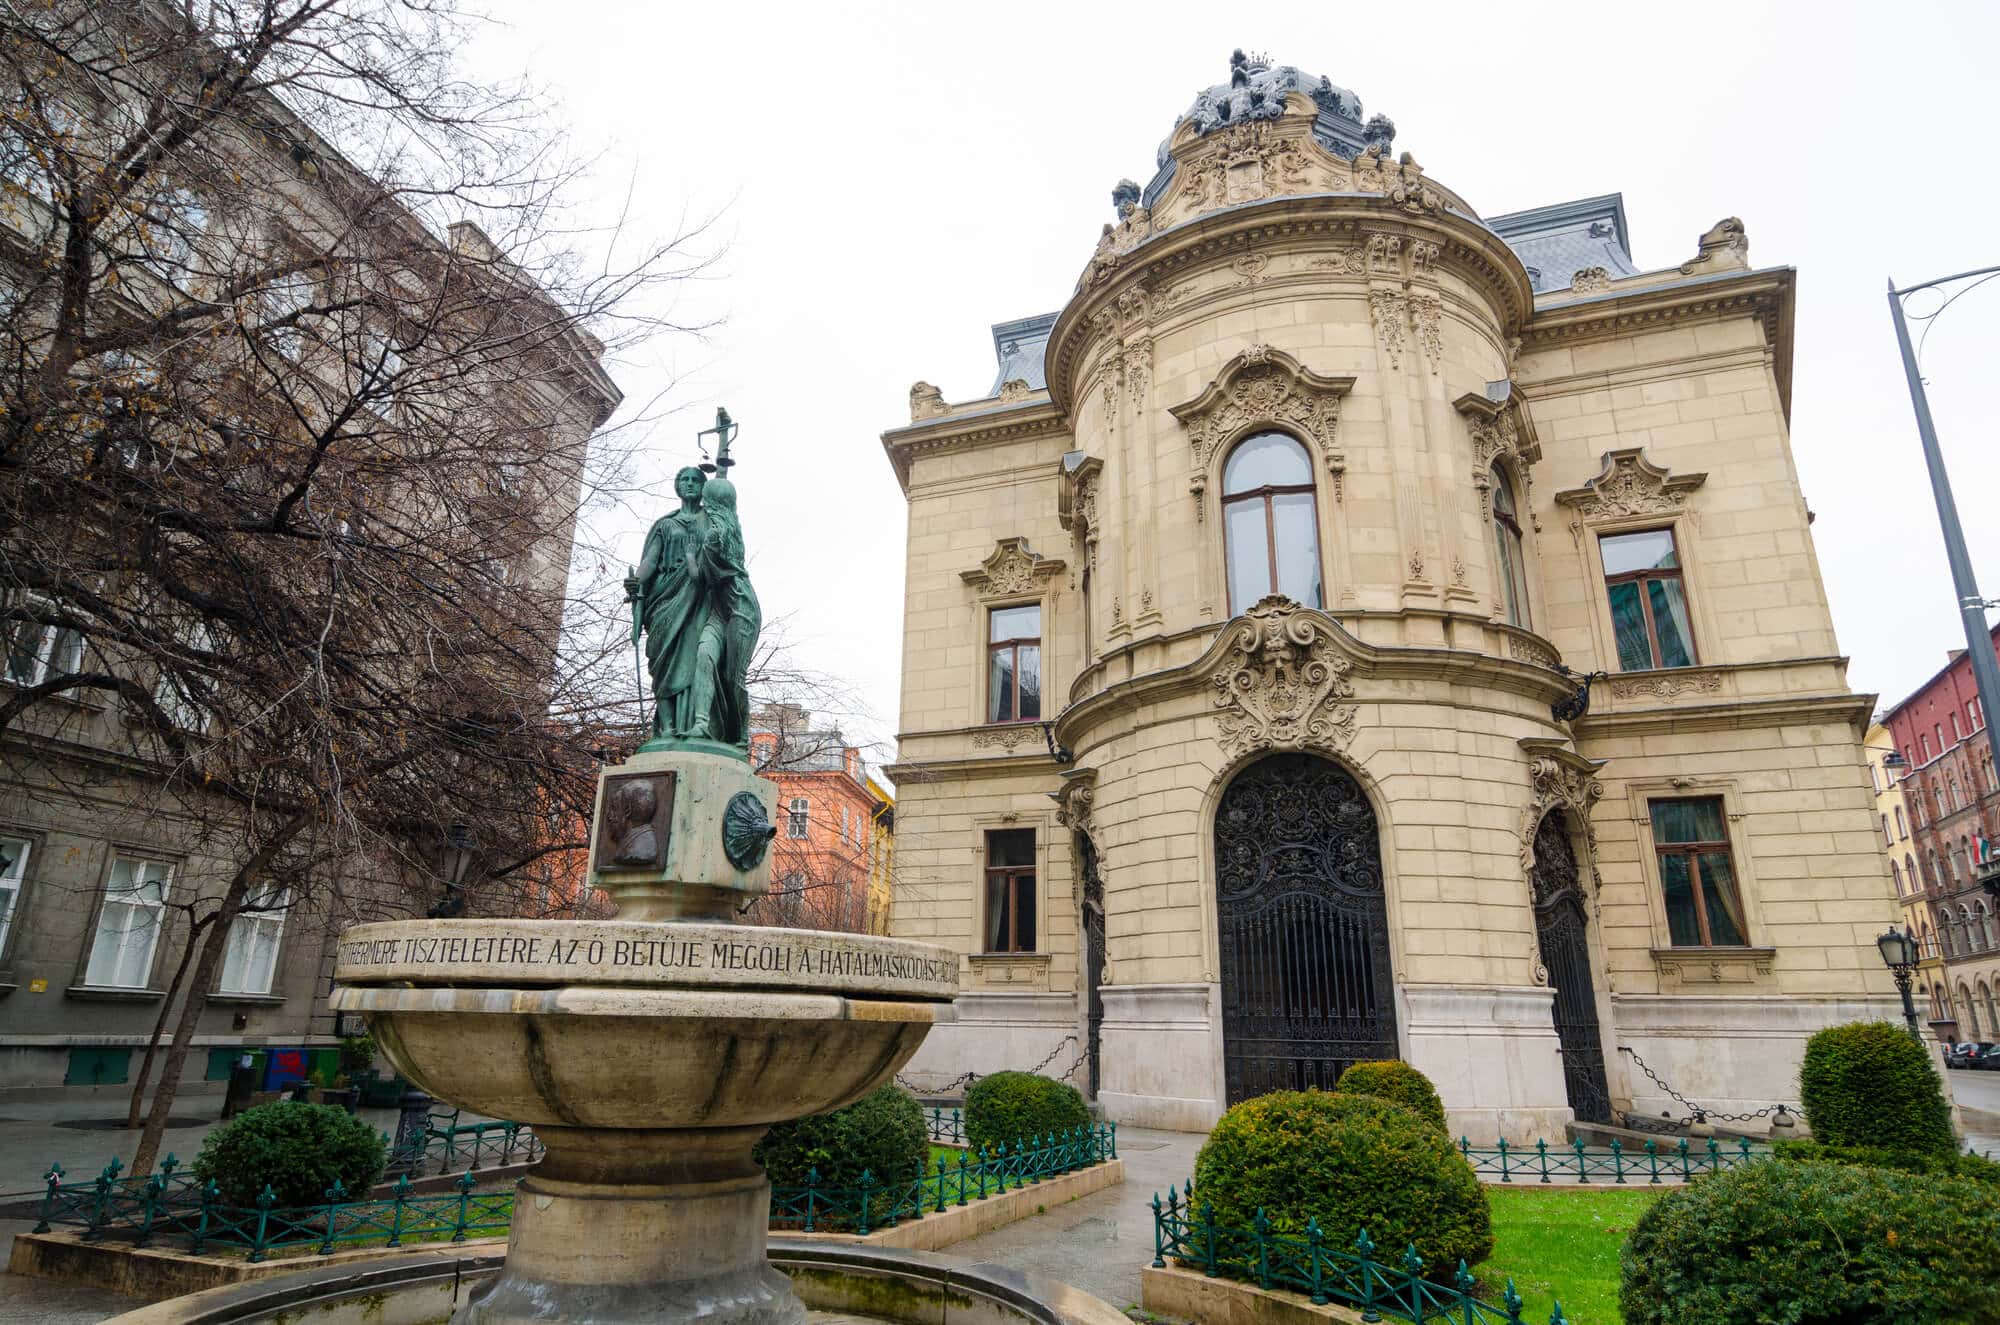 Budapest Instagram photo guide - Metropolitan Ervin Szabó Library